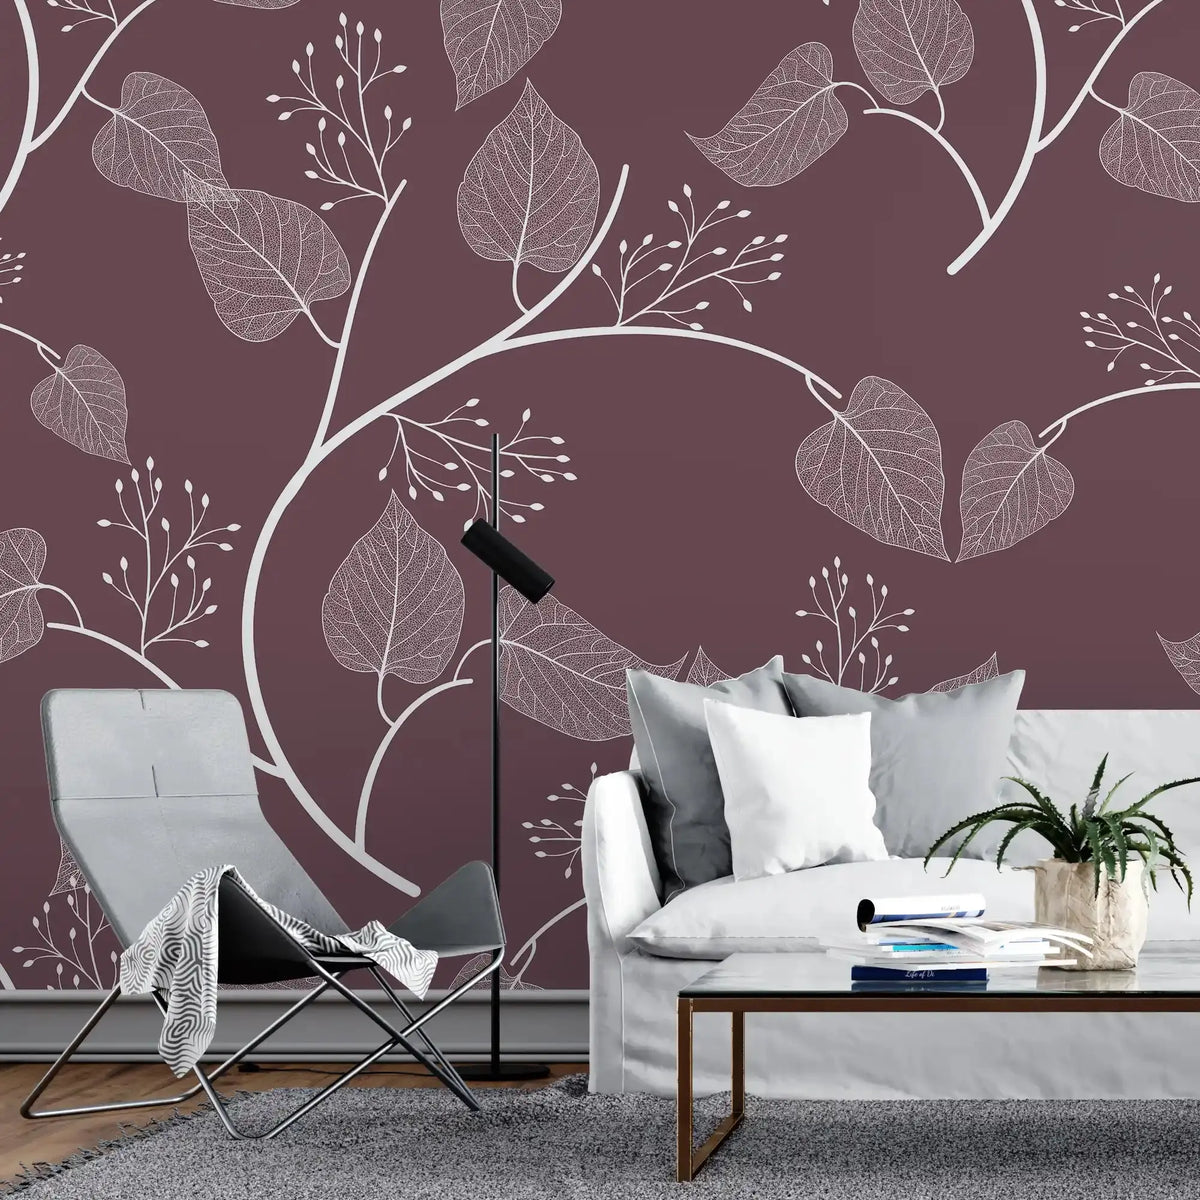 3104-F / Floral Peel and Stick Wallpaper, Botanical Leaf Design Wall Mural - Artevella